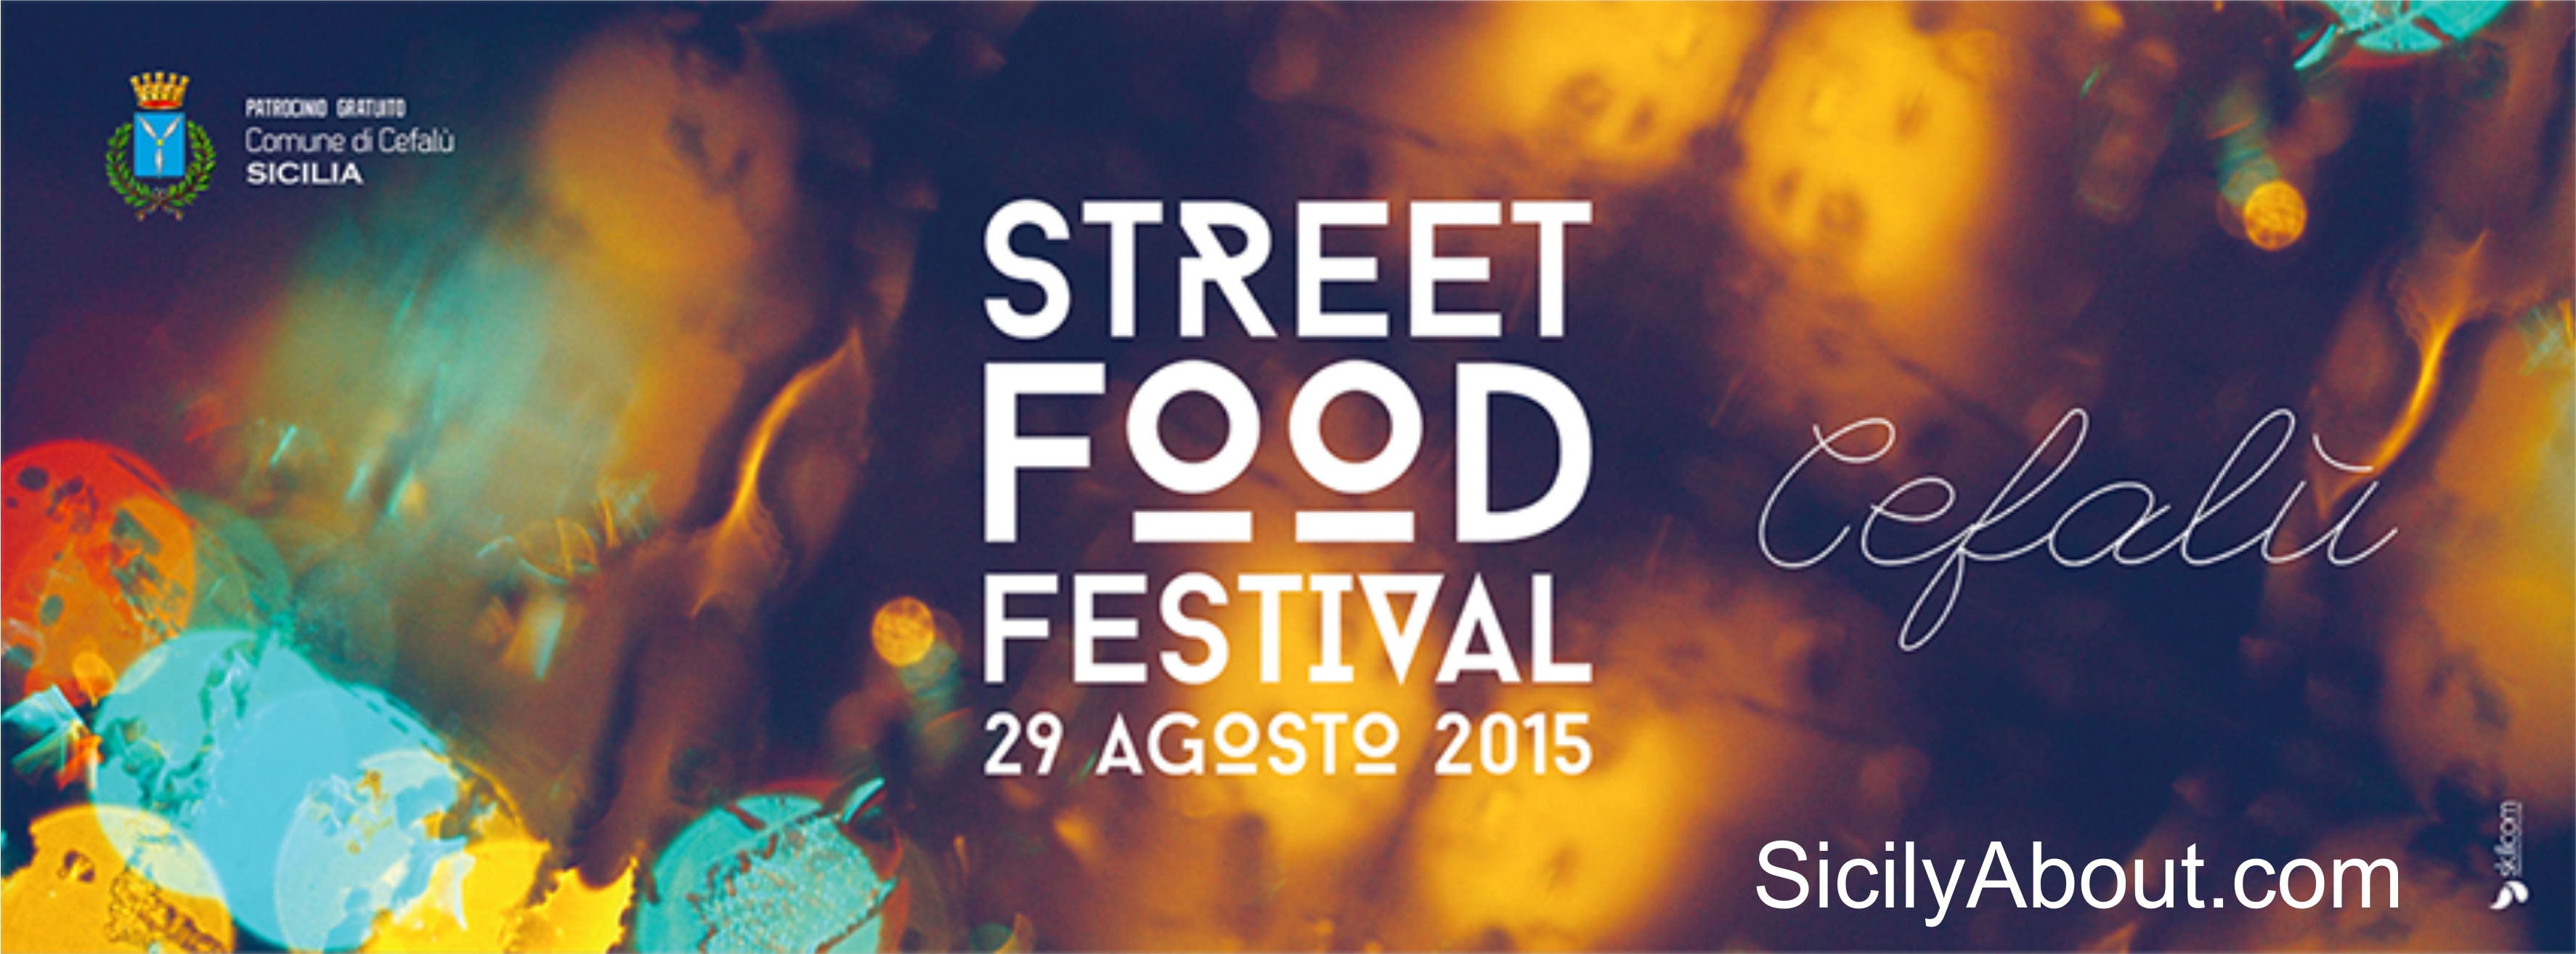 Street Food Festival Sicily Cefalù 2015